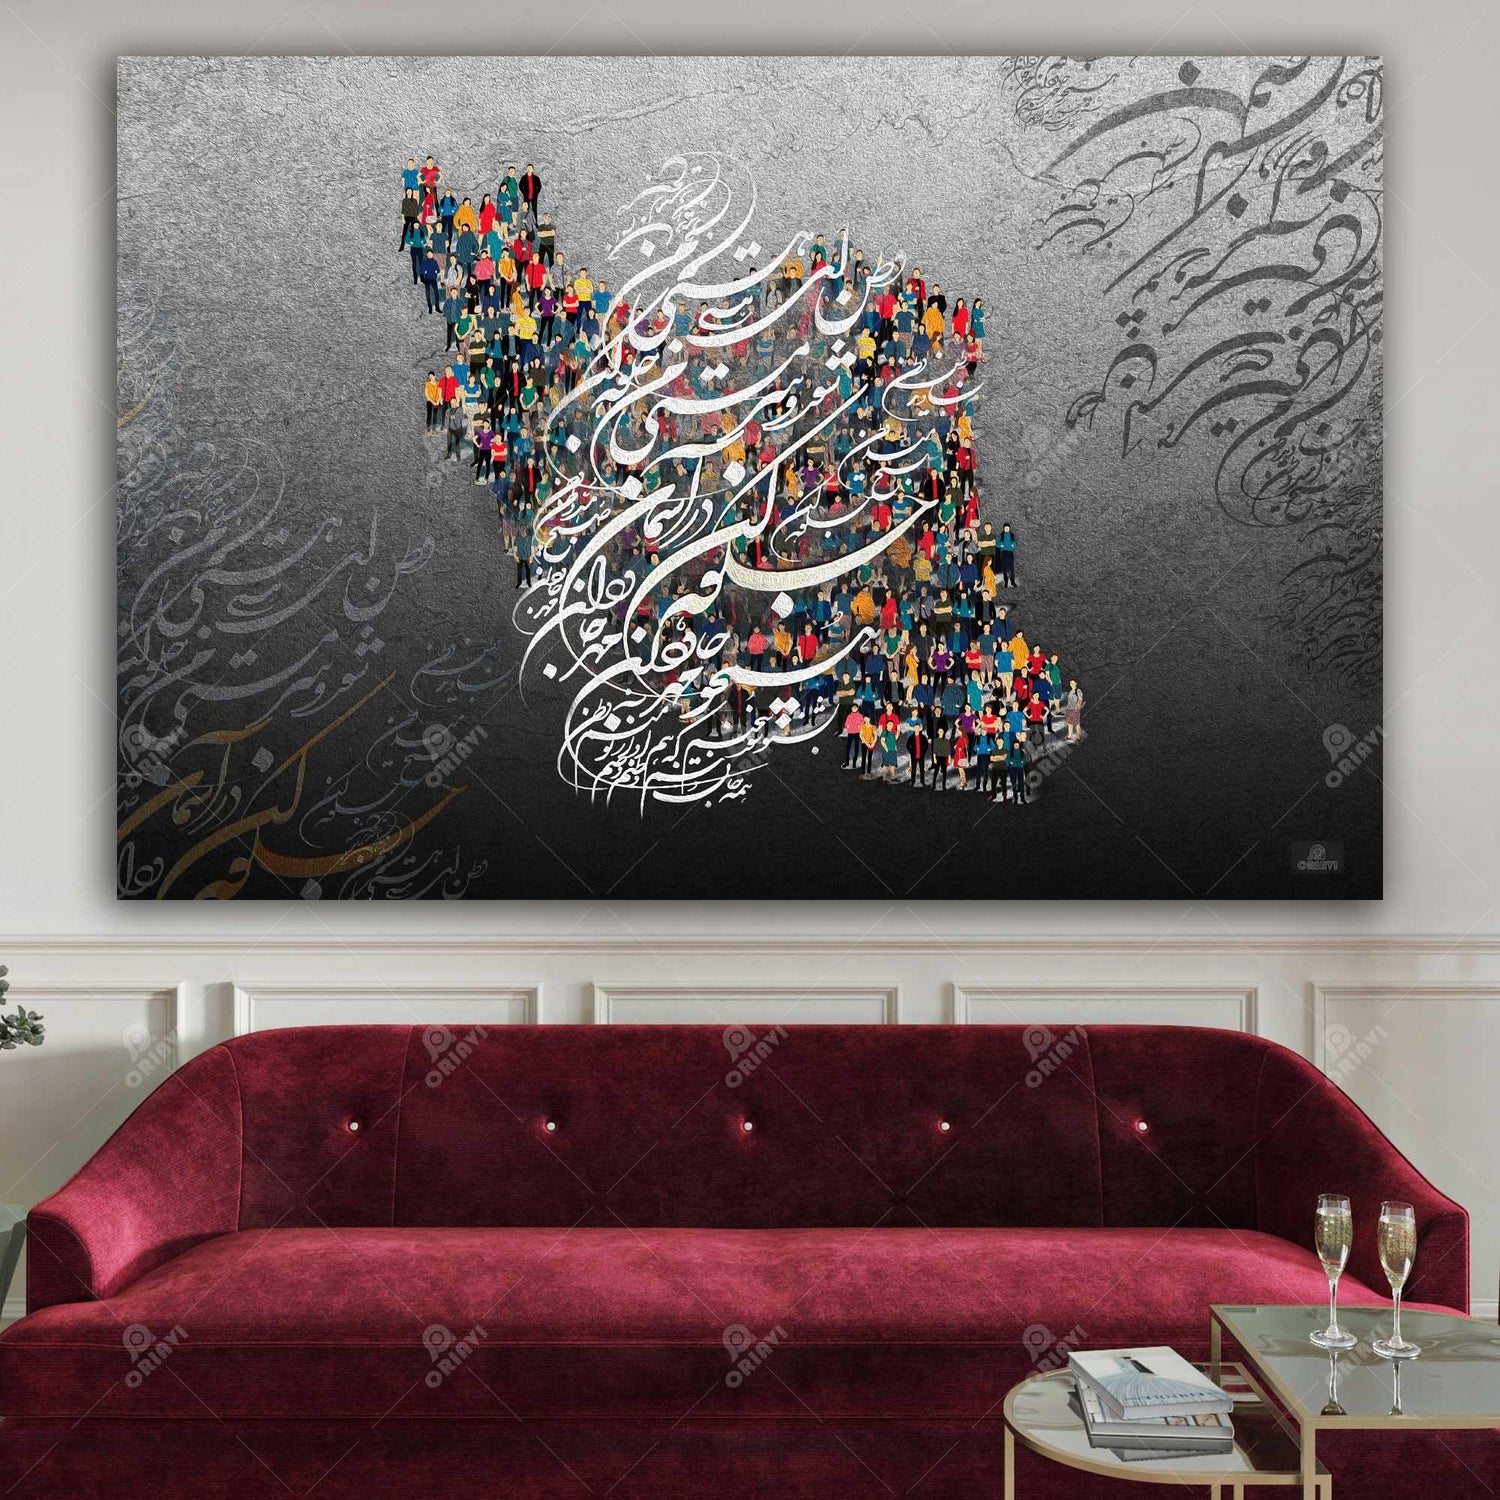 وطن ای هستیِ من - Persian calligraphy wall art, High Quality and Ready to Hang. This Modern Persian Wall décor completes and elevates your home. Amazing and eye-catching for your home or office.